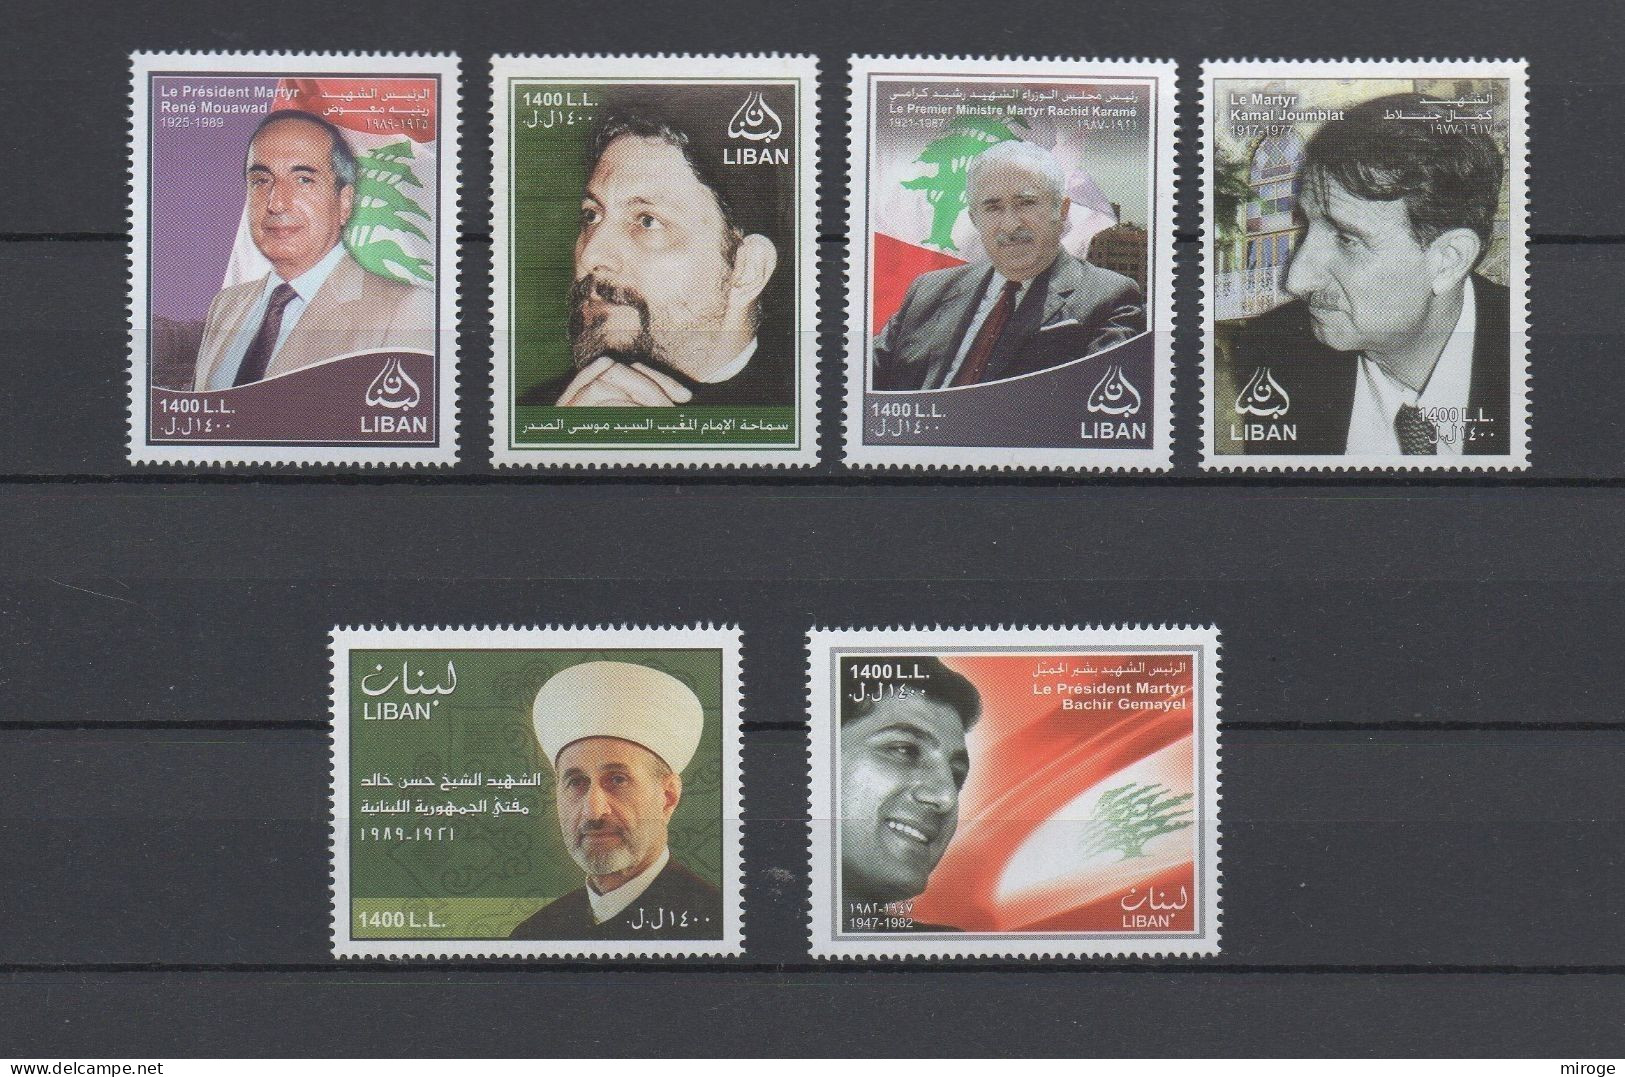 Martyrs Complete Set MNH Lebanon Stamps 2010 President Leader, Liban Libanon - Lebanon